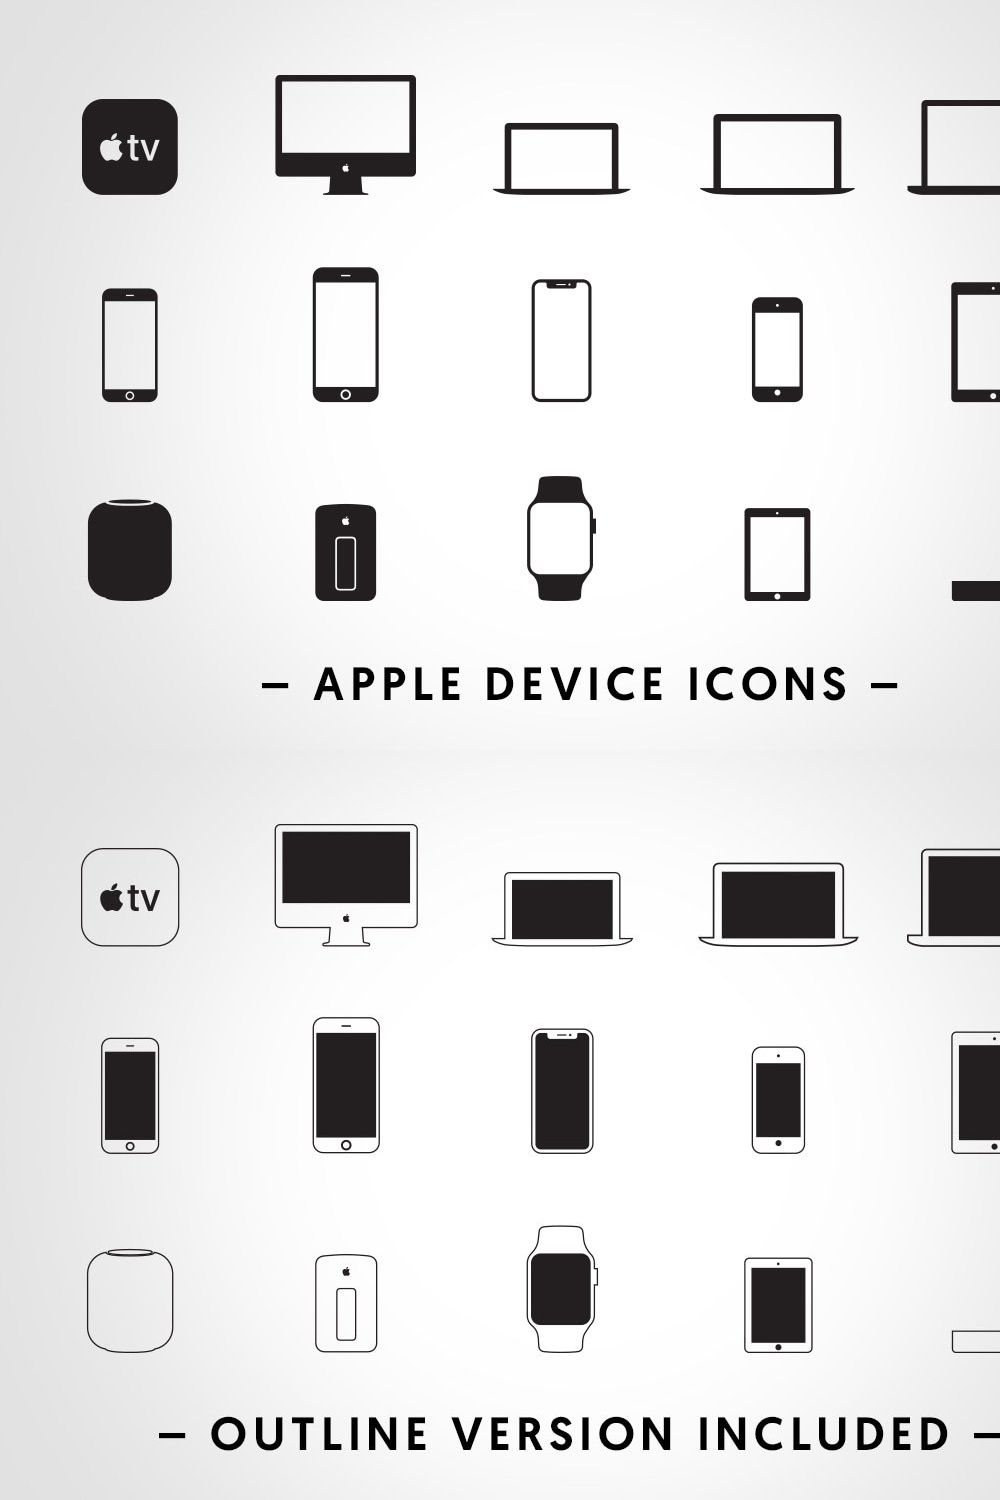 Apple Device Icons - Vectors pinterest preview image.